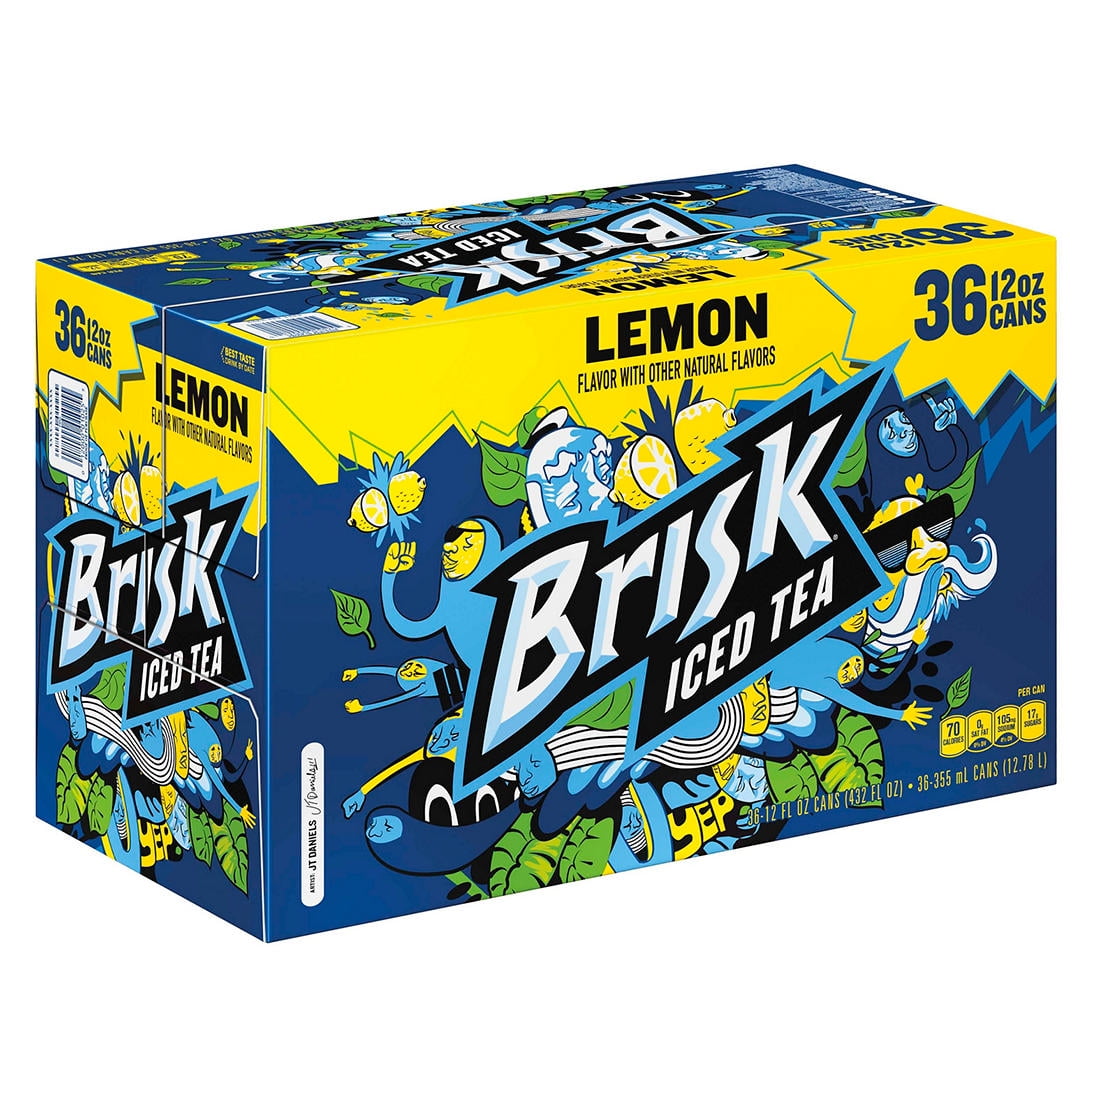 Brisk Lemon Iced Tea, Bold Lemon, 12 fl oz, 12 Pack Cans